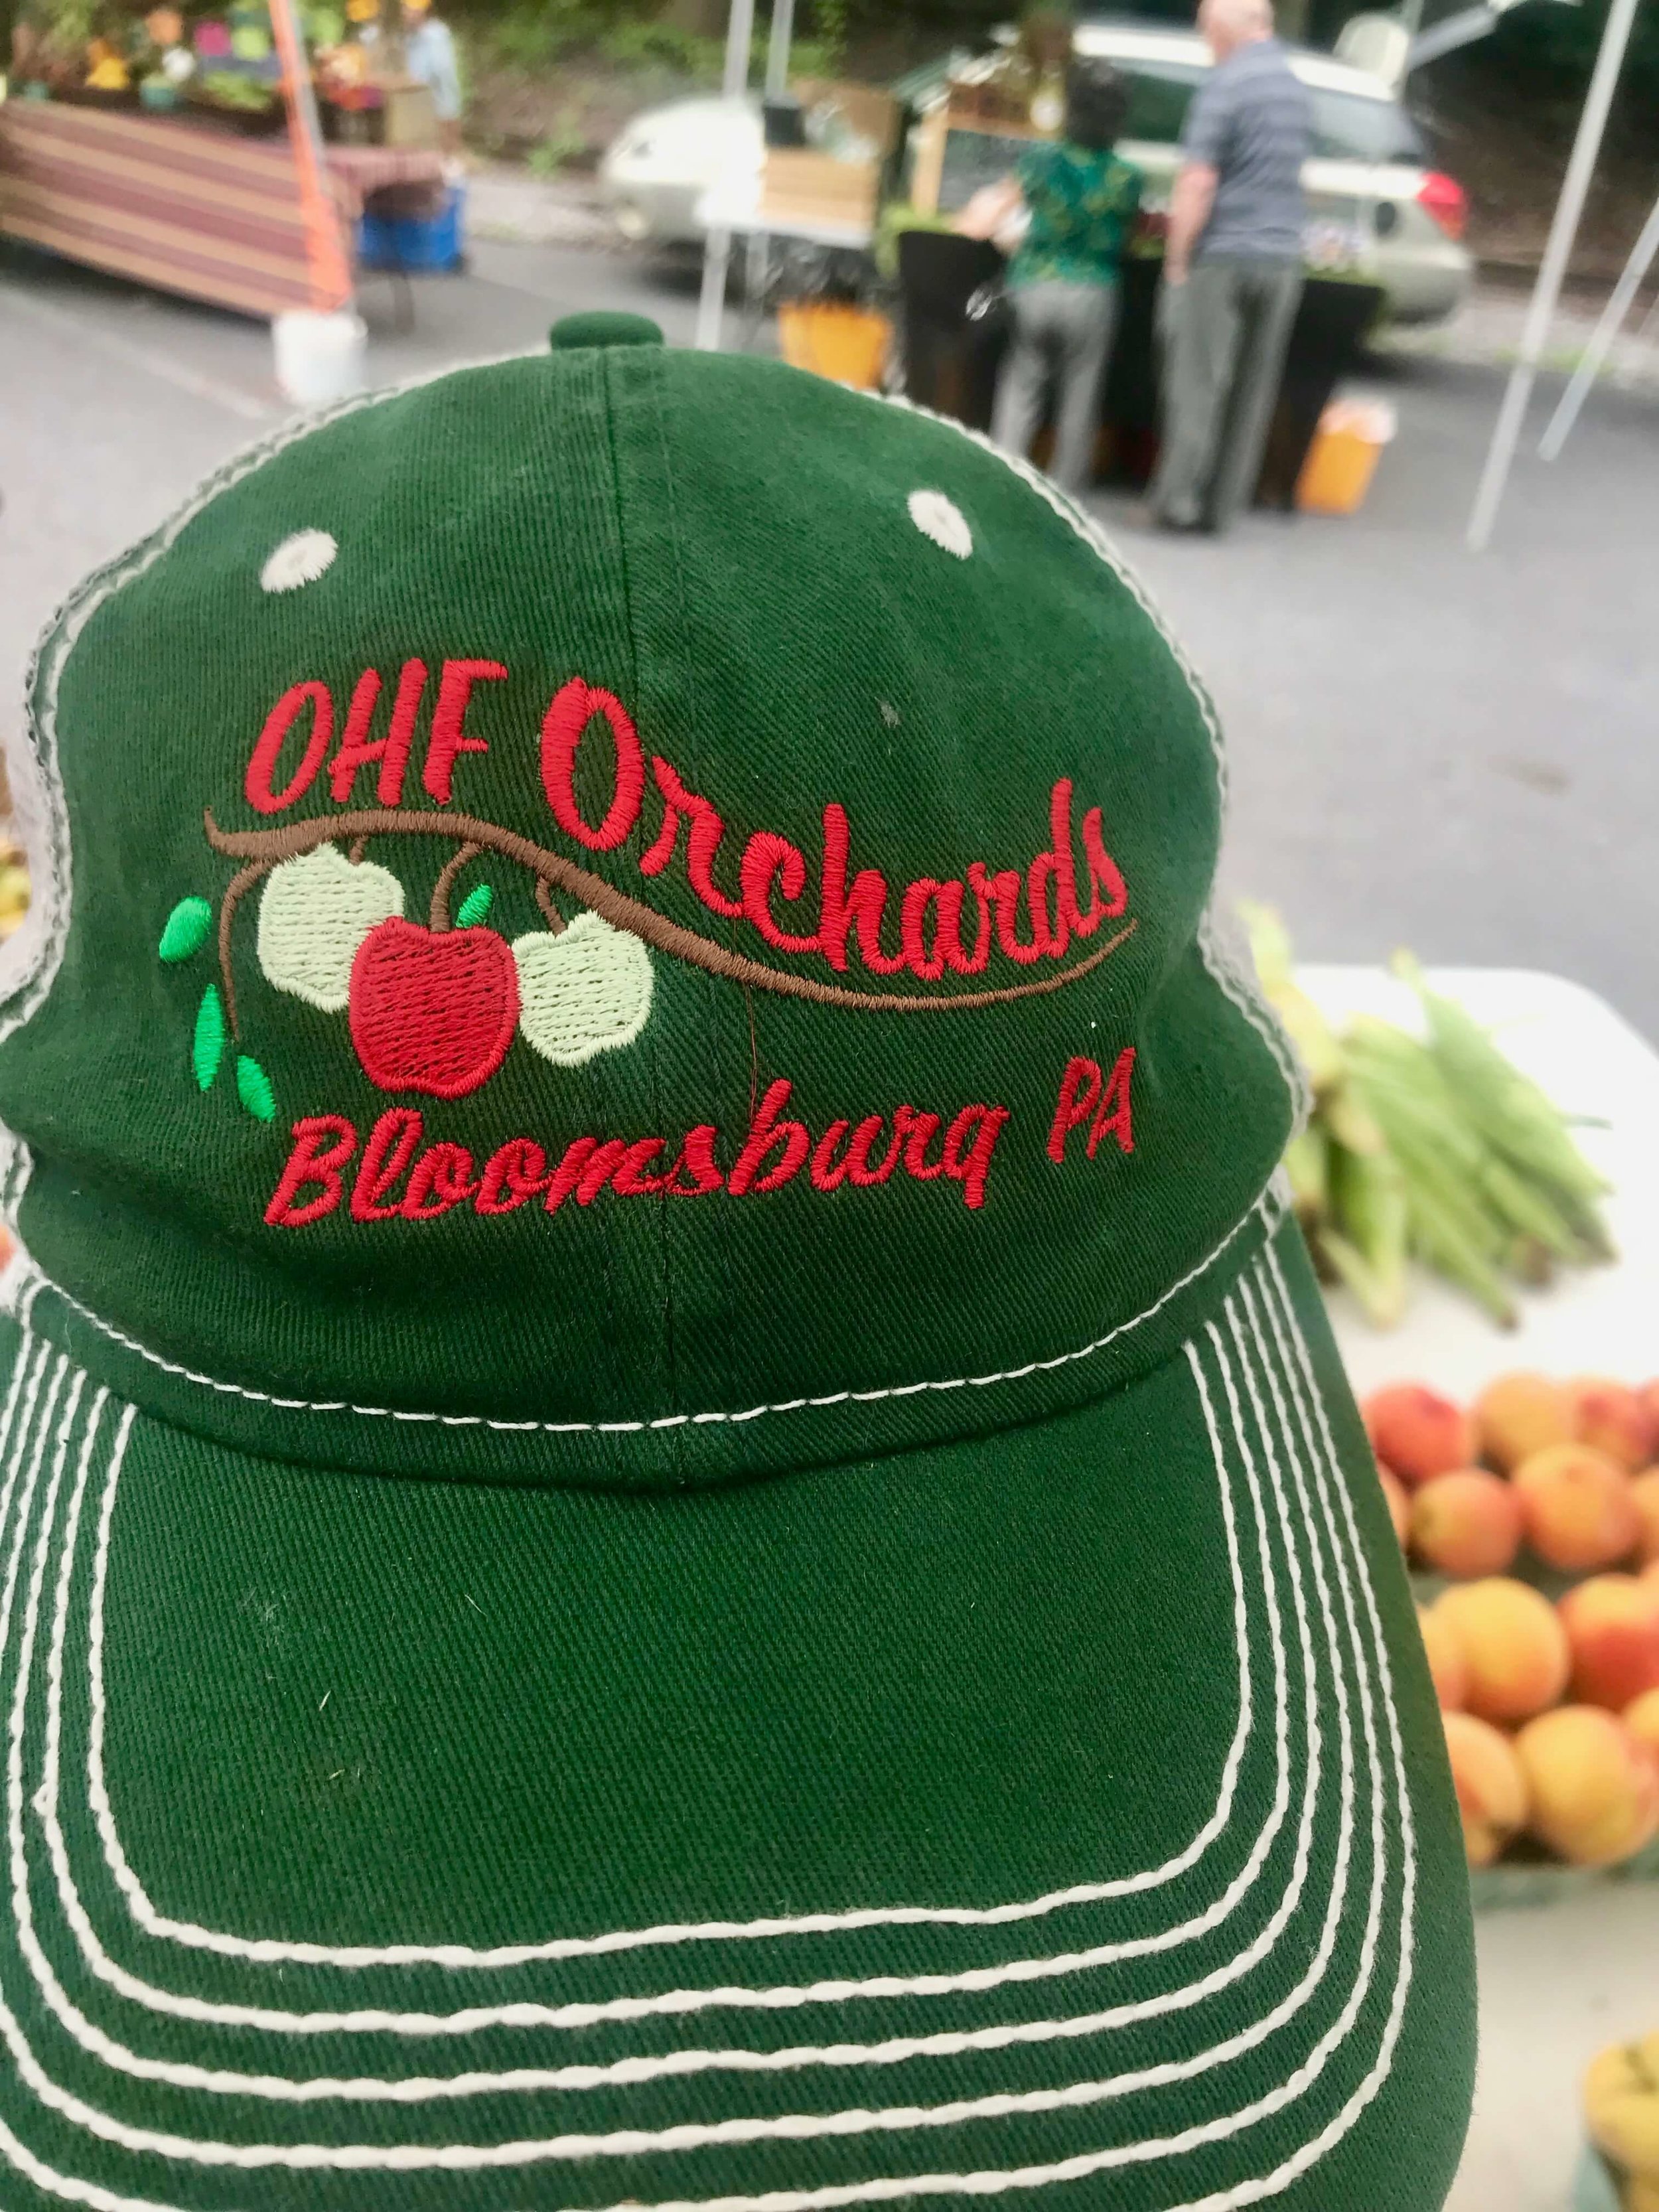 OHF Orchards.jpeg